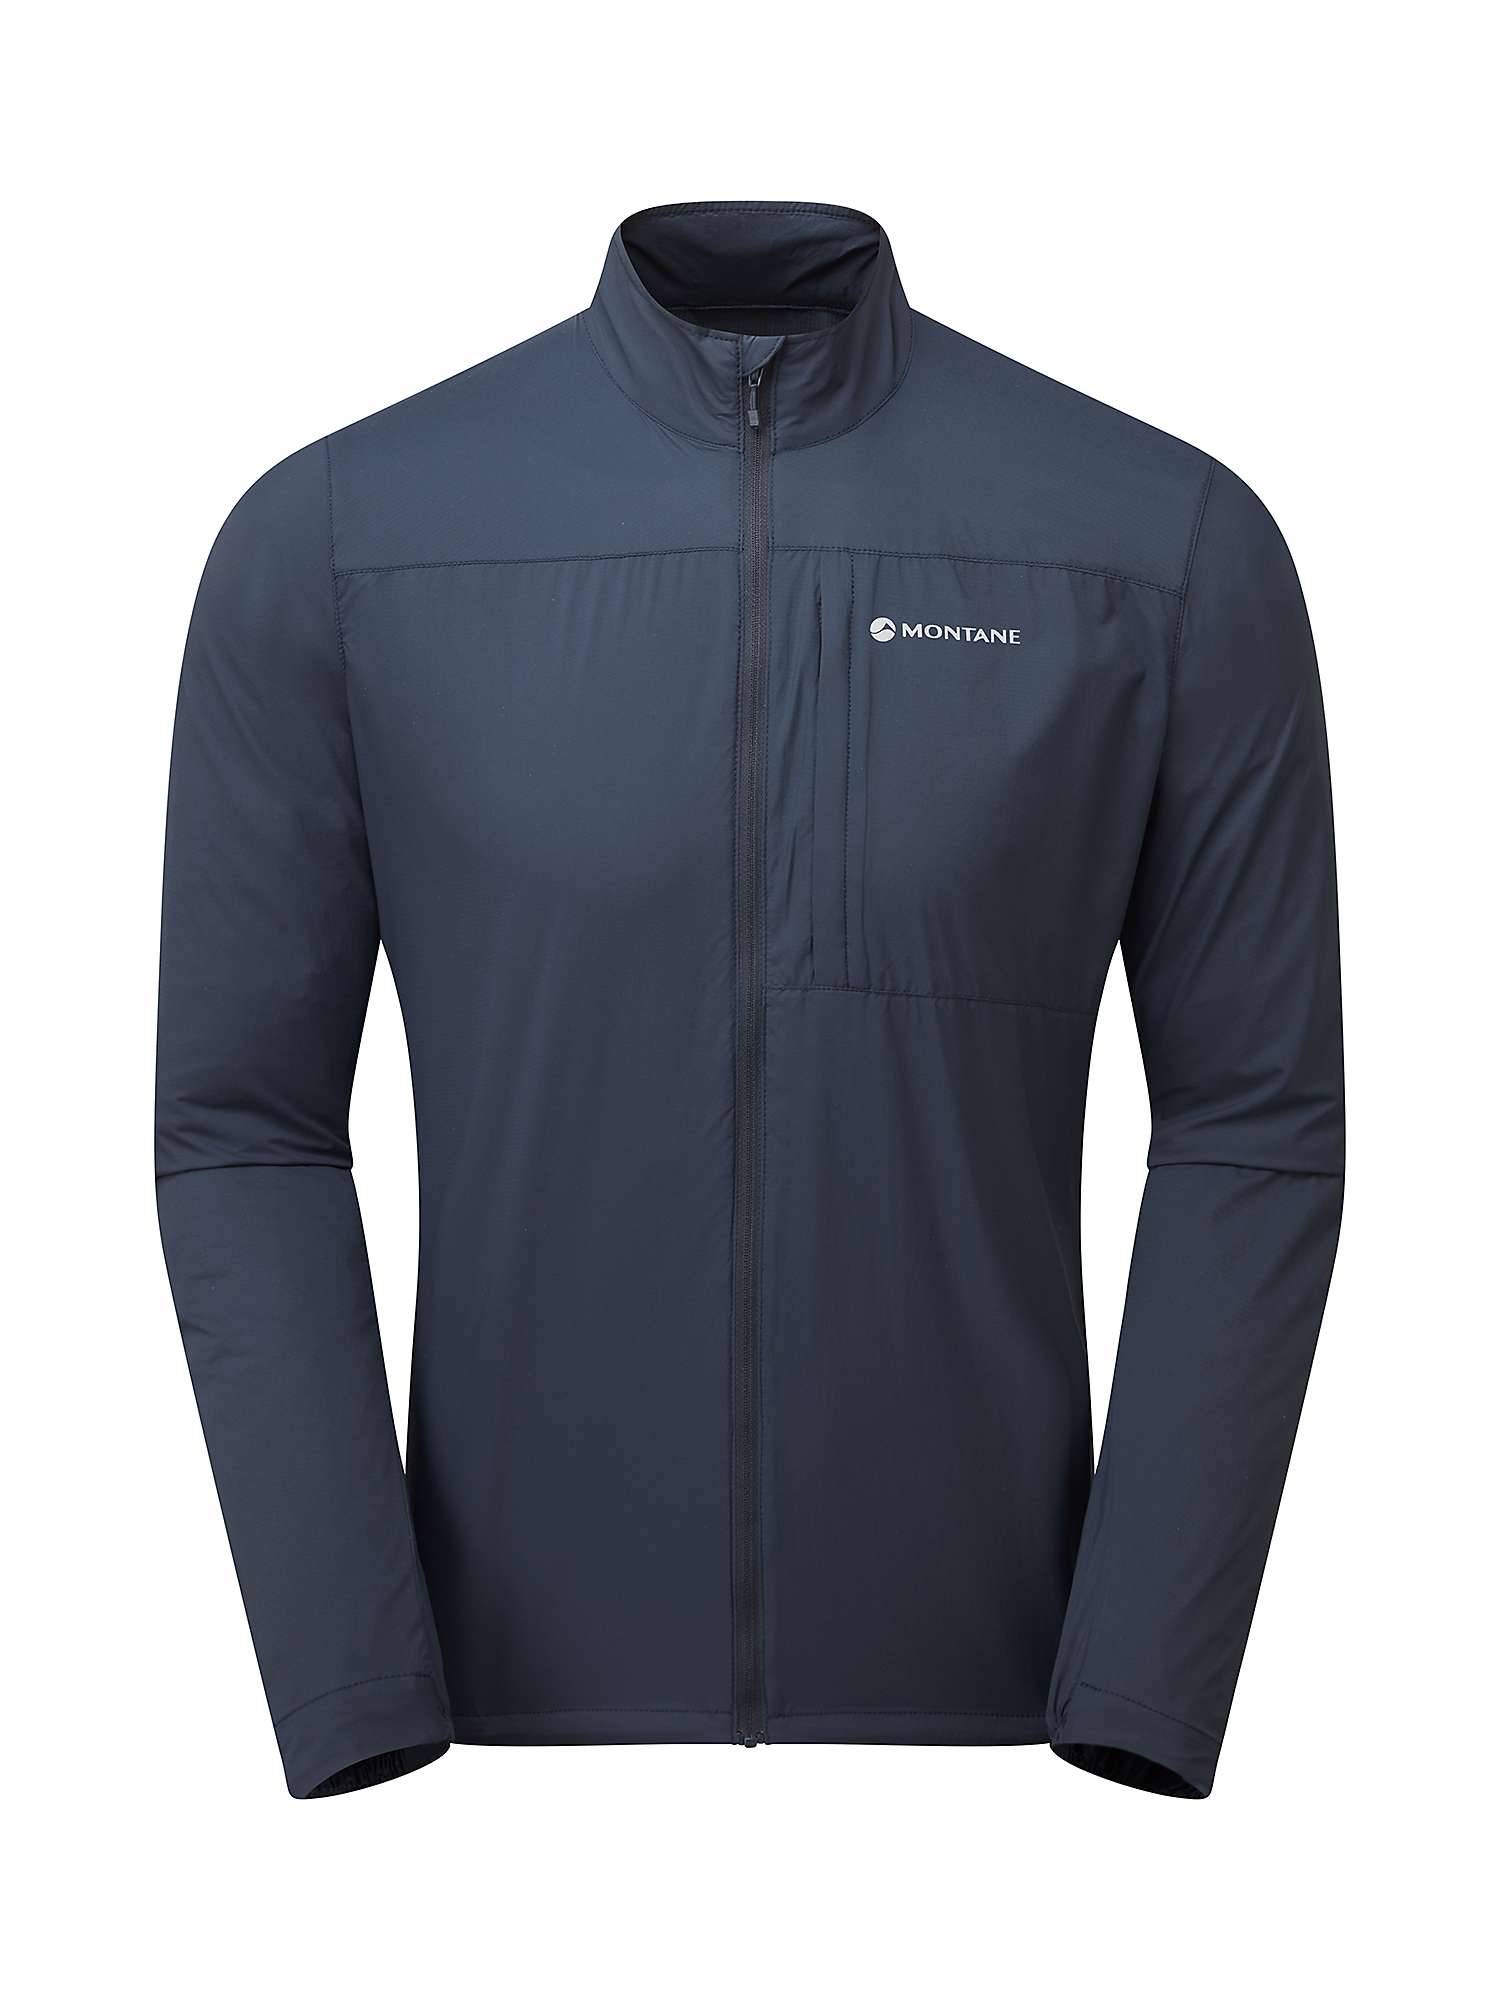 Montane Featherlite Windproof Jacket, Eclipse Blue at John Lewis & Partners